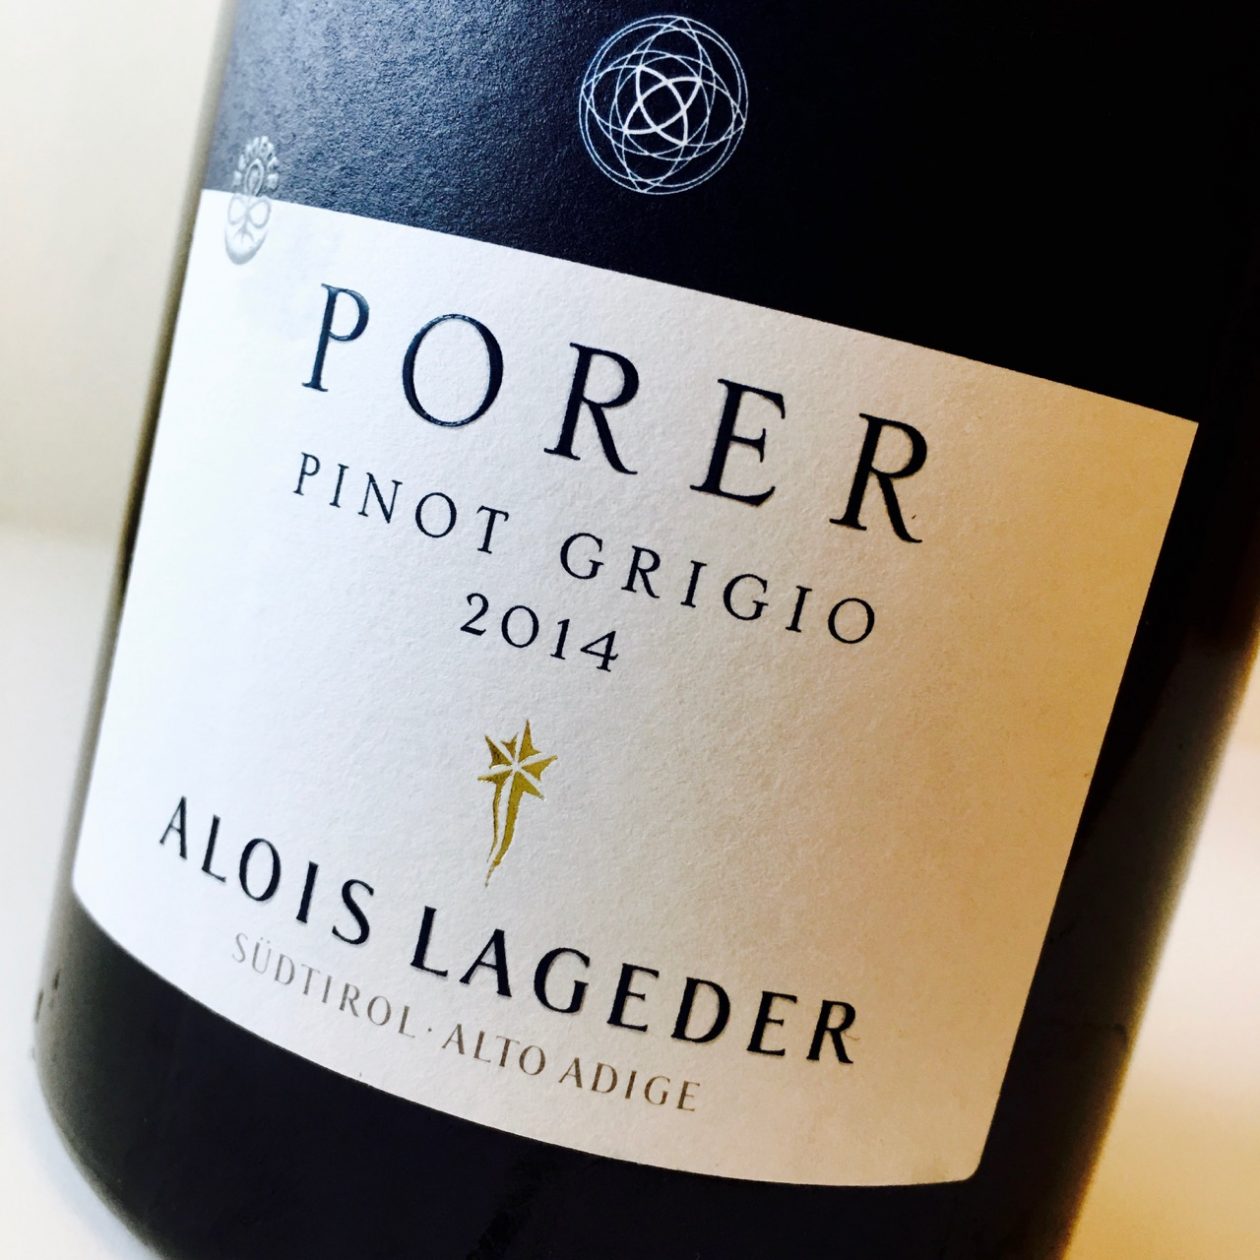 2014 Alois Lageder Pinot Grigio Porer Südtirol